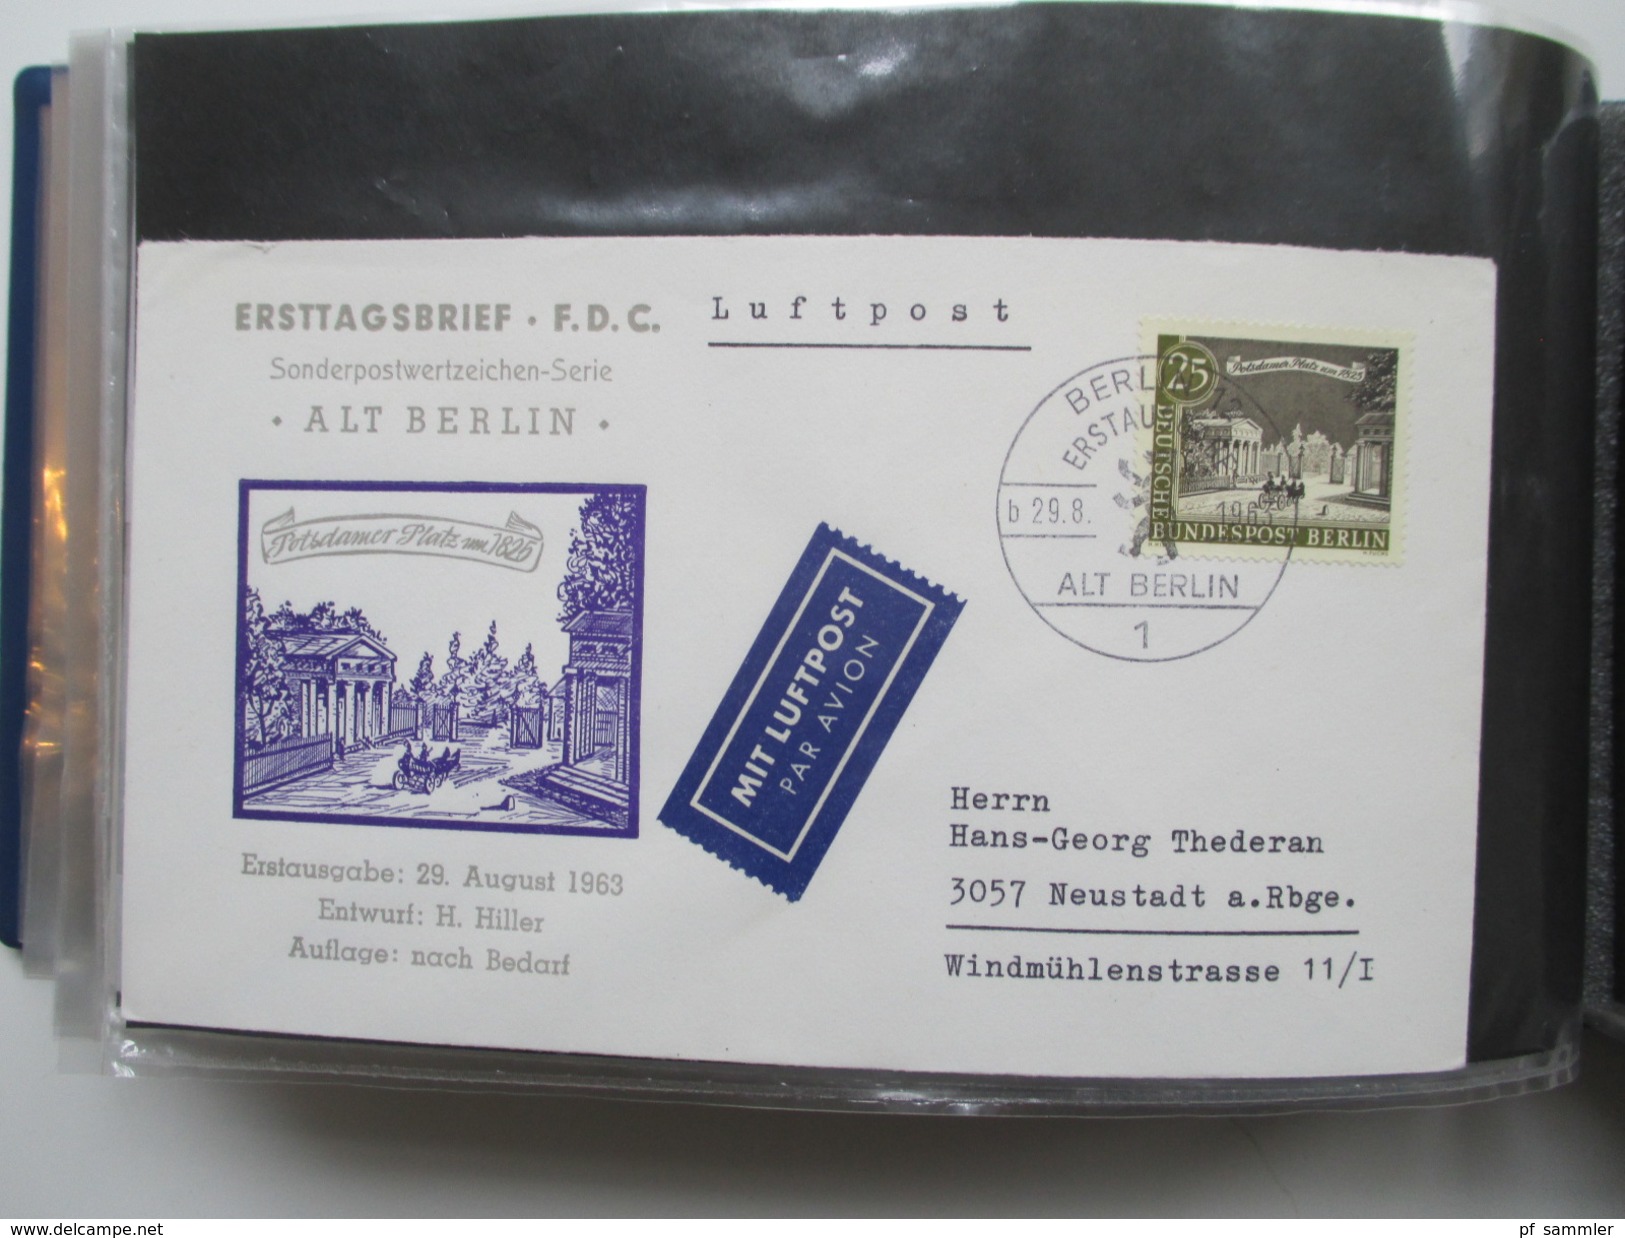 Berlin Belegesammlung 100 Briefe.Bedarf / FDC 1972-1975. Interessante Stücke / Stöberposten! Bund / Berlin Stempel. ATM